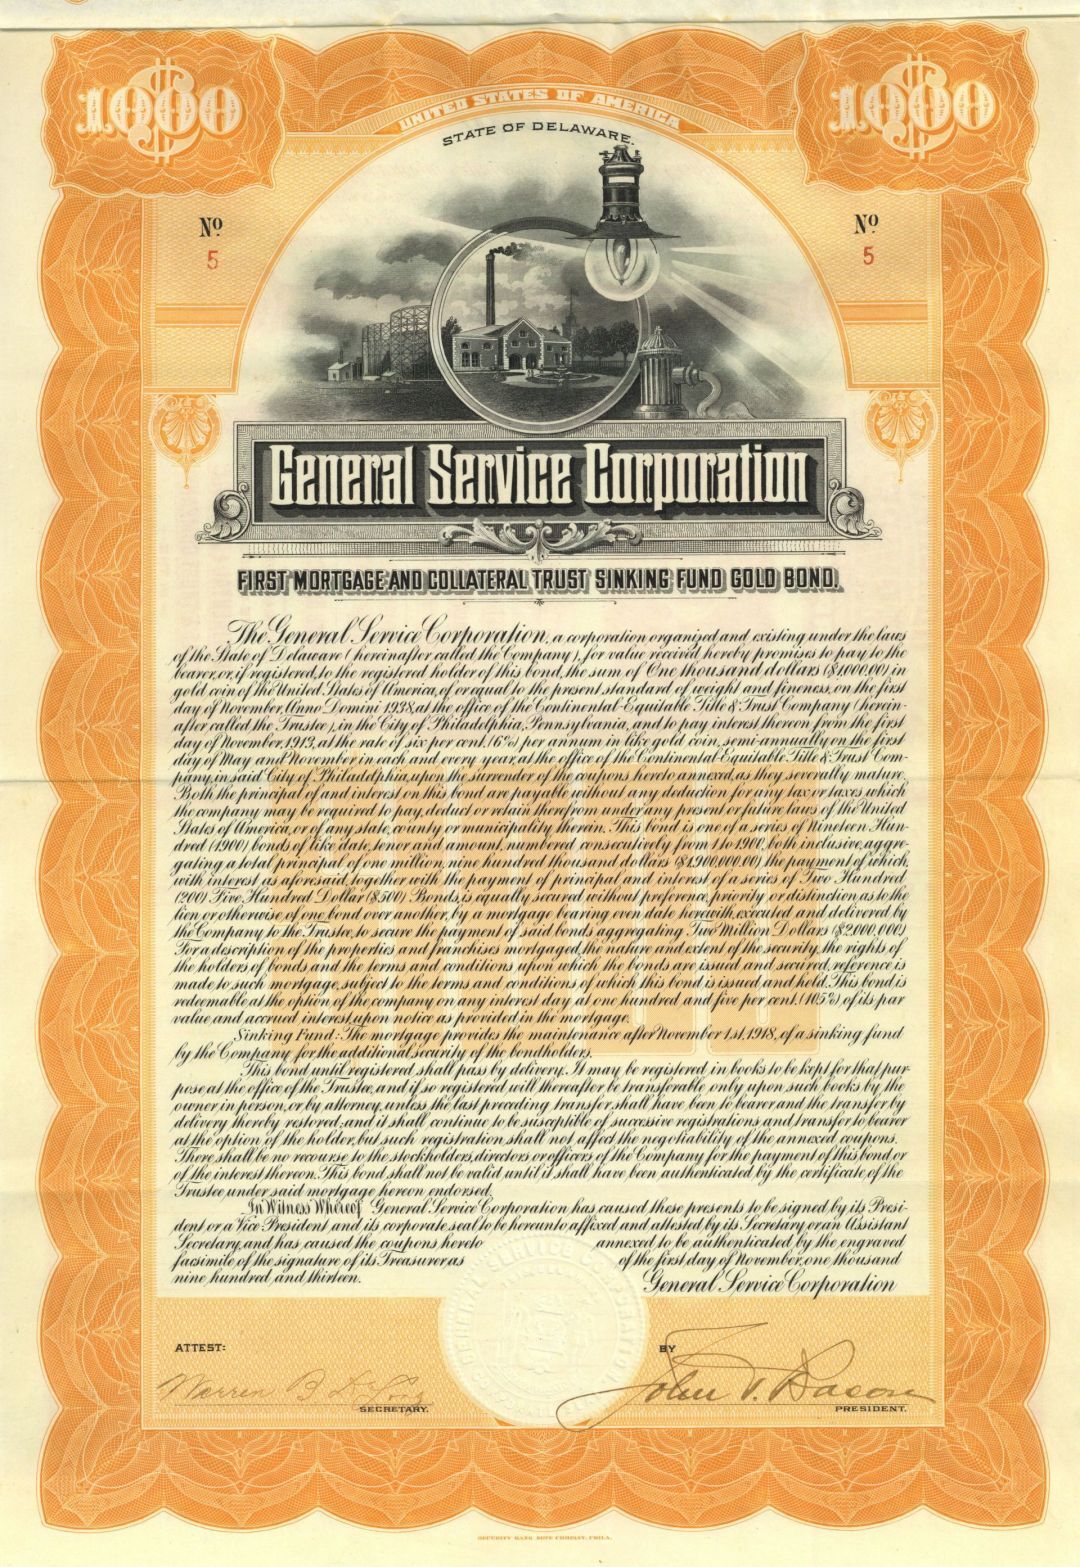 General Service Corporation - 1913 dated $1,000 Delaware Gold Bond - General Bon